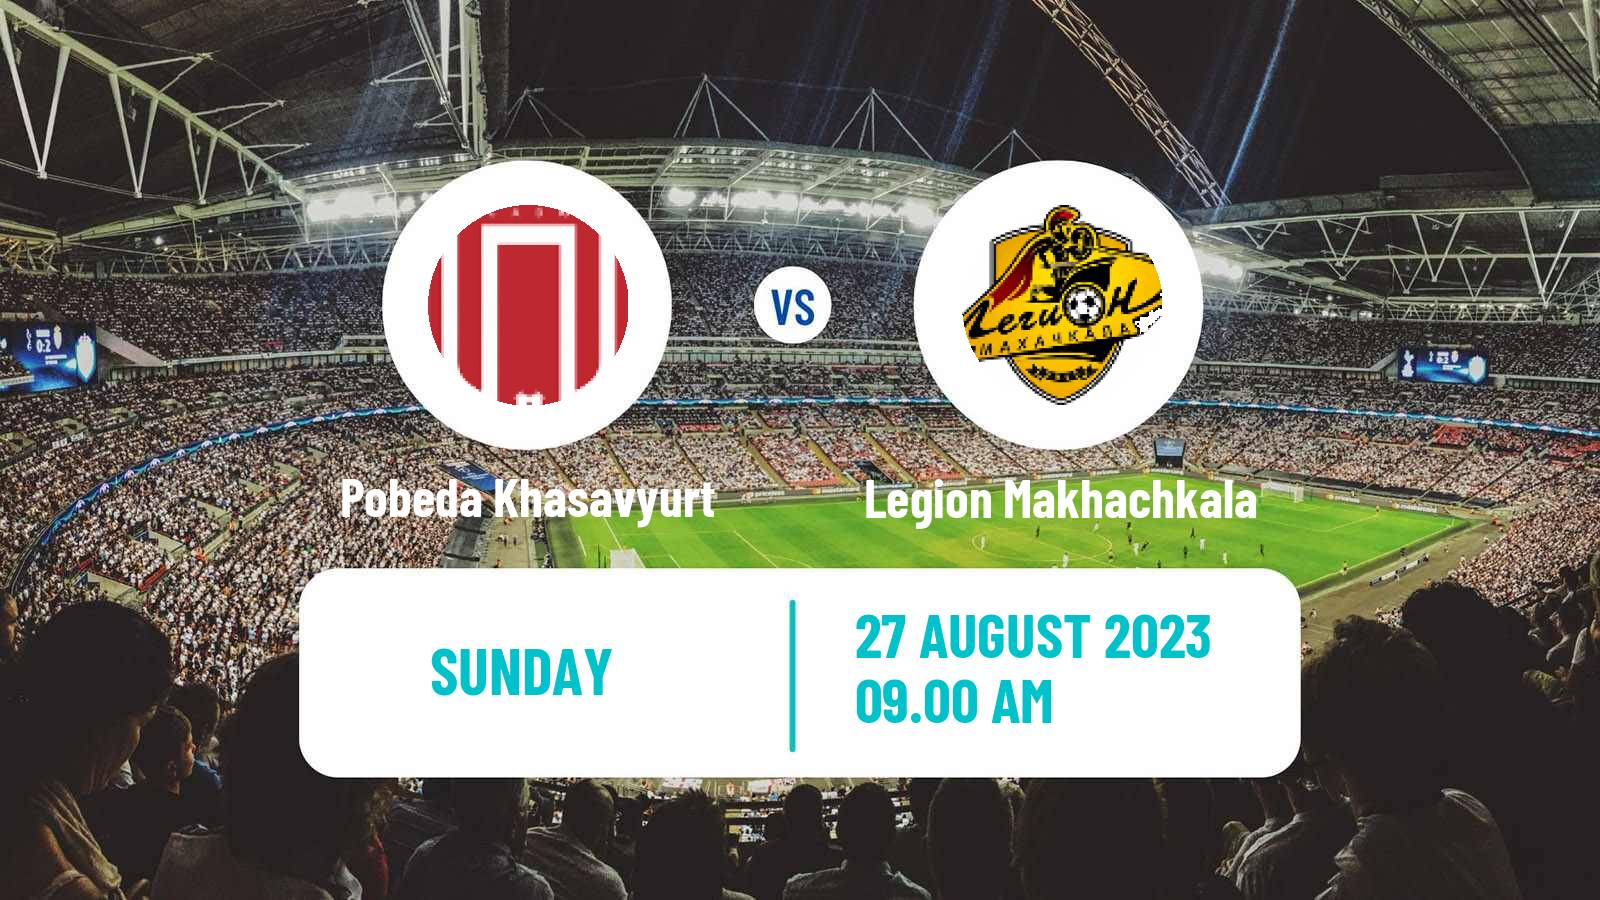 Soccer FNL 2 Division B Group 1 Pobeda Khasavyurt - Legion Makhachkala